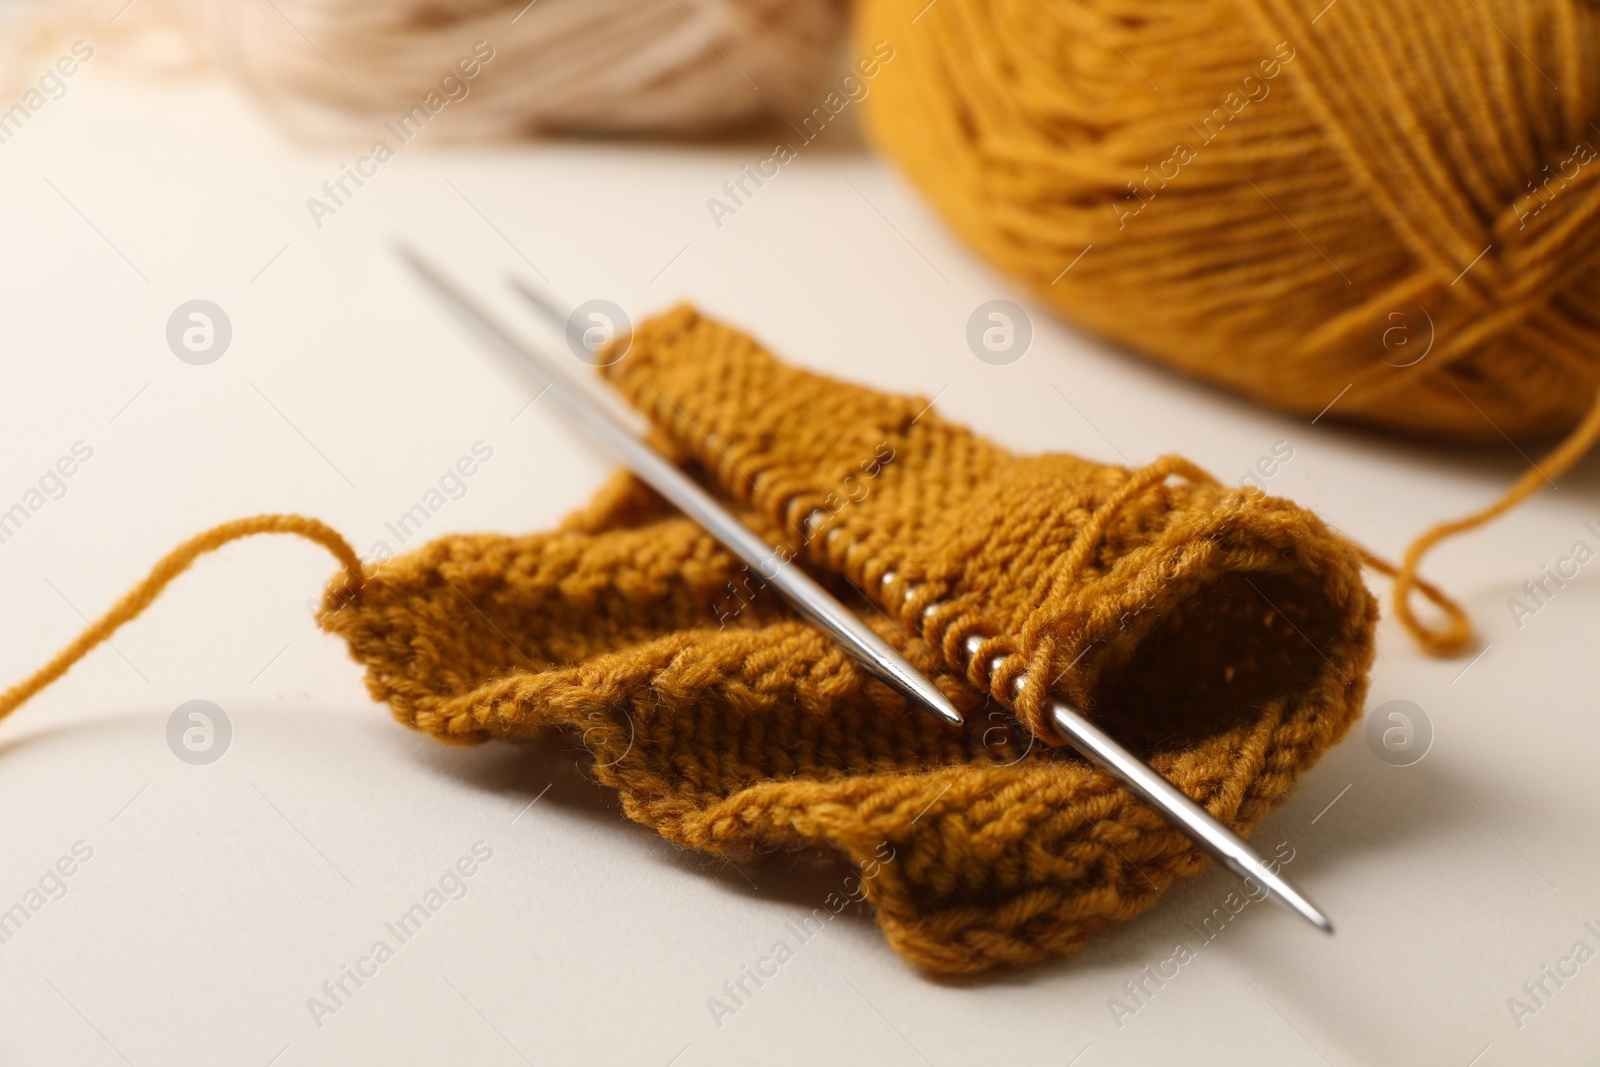 Photo of Soft orange knitting and metal needles on beige background, closeup